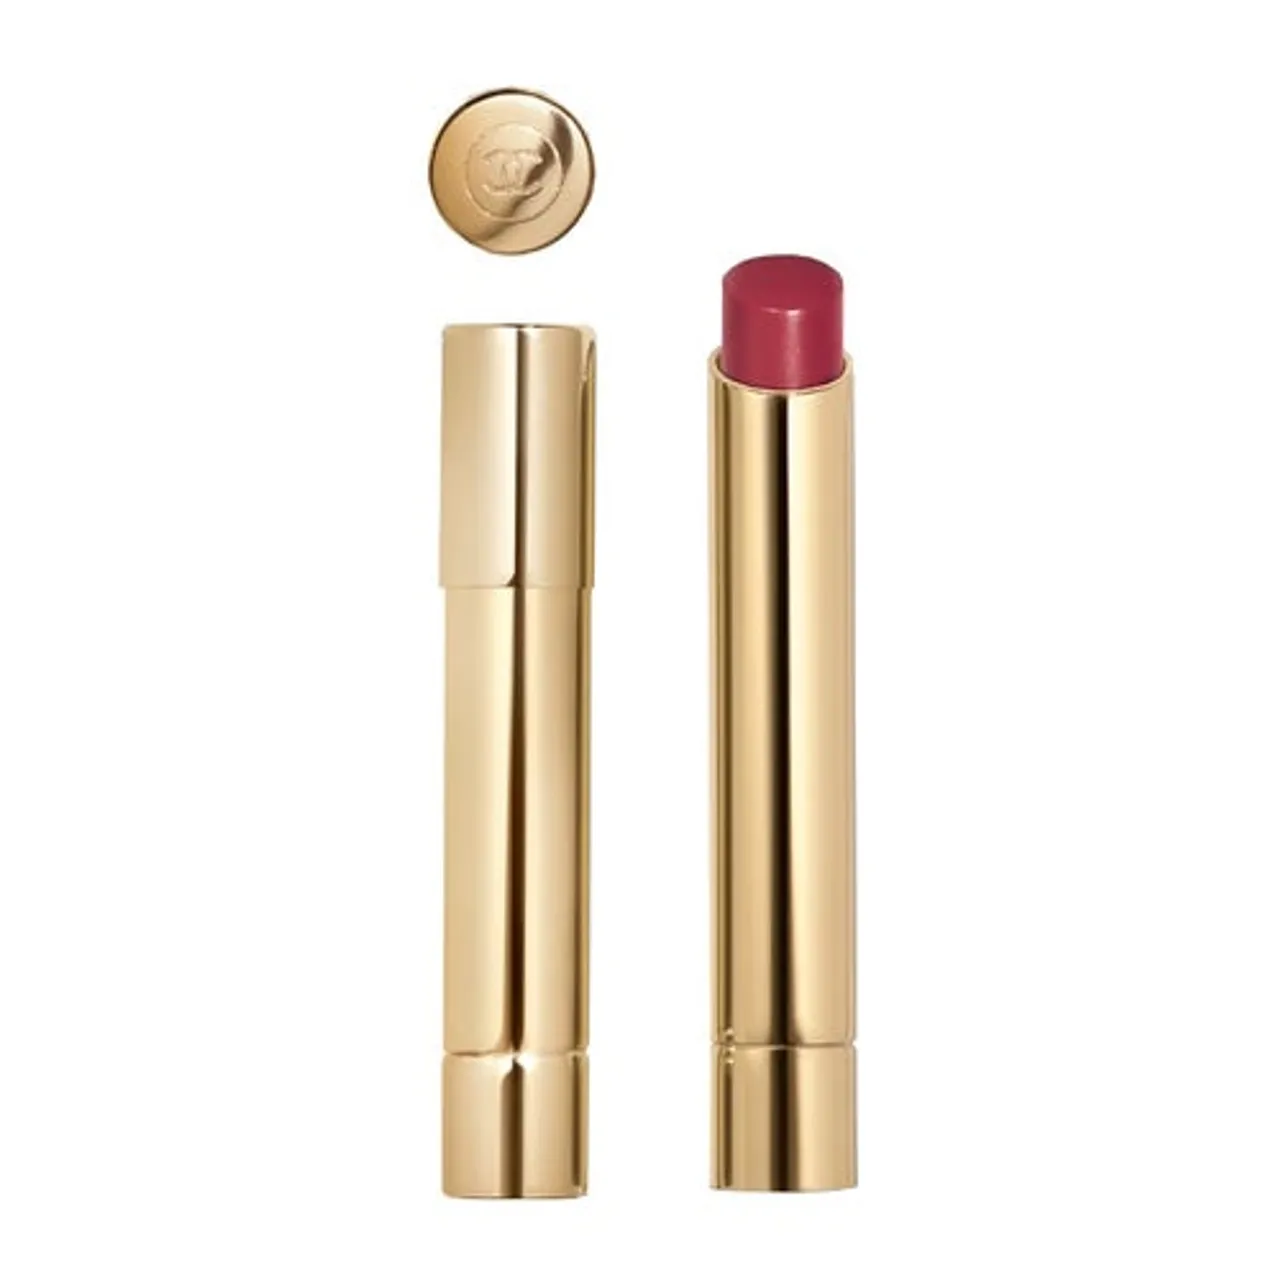 Chanel Rouge Allure L'extrait Lipstick Refill 832 2 gram